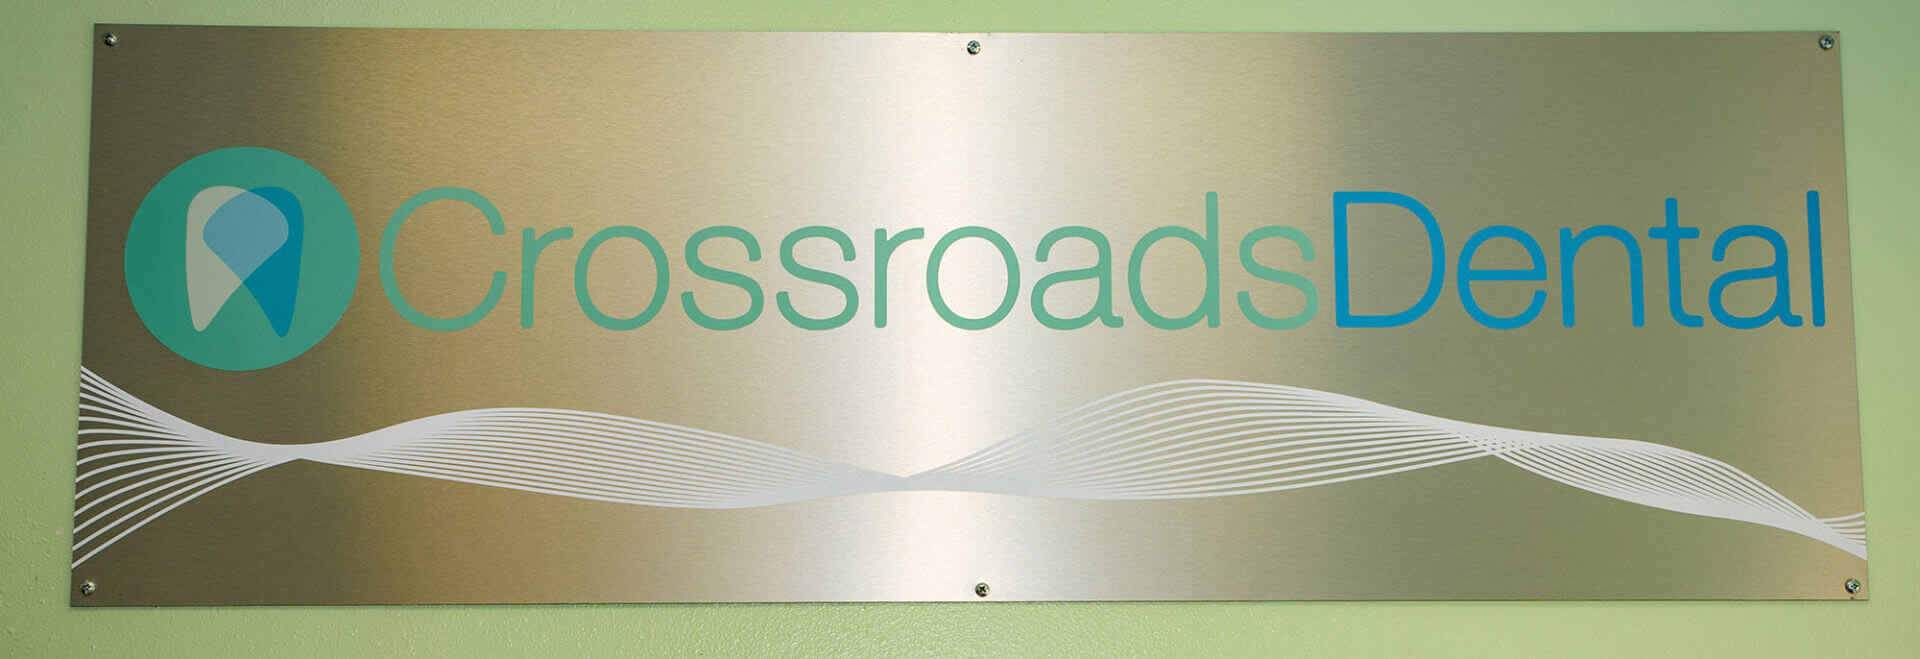 Crossroads Dental office logo sign